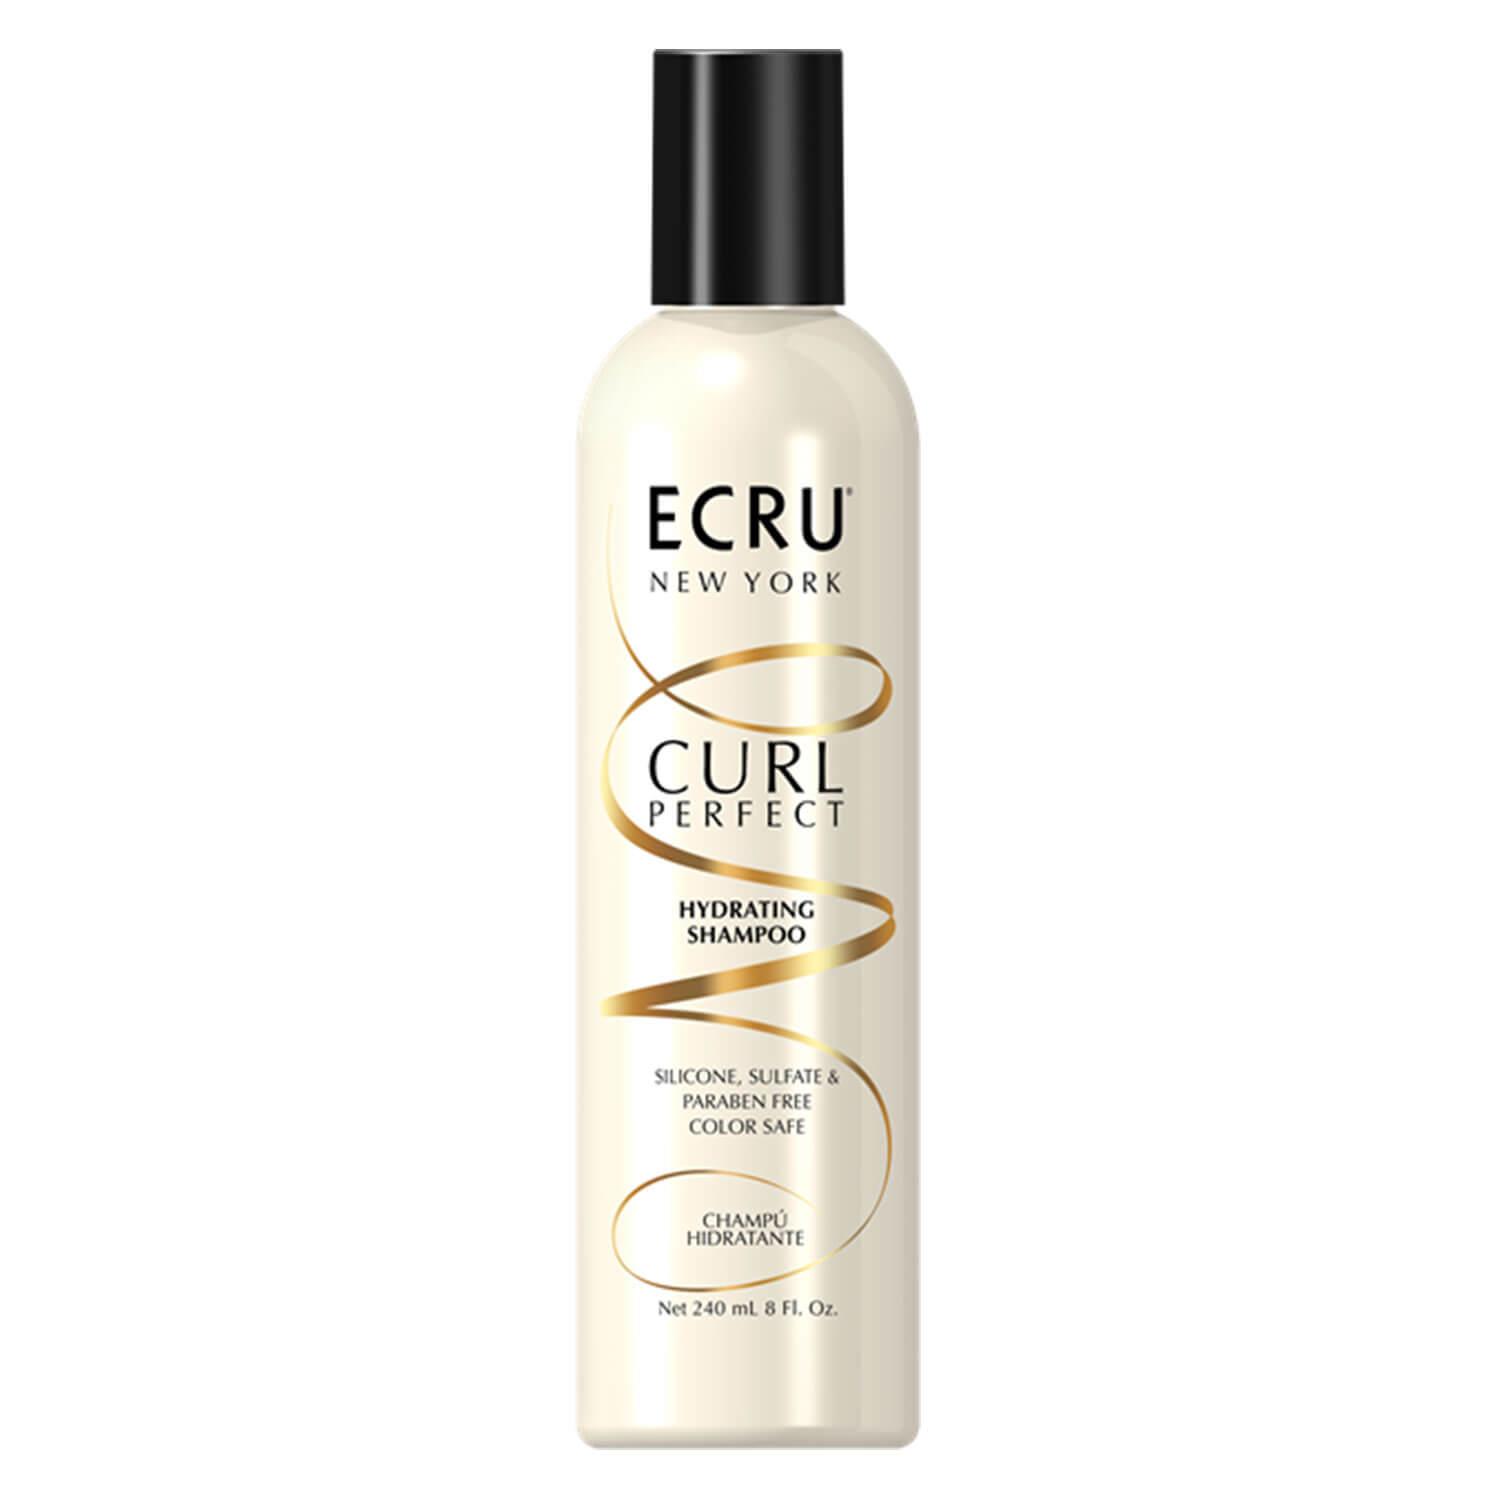 Ecru Curl Perfect - Hydrating Shampoo